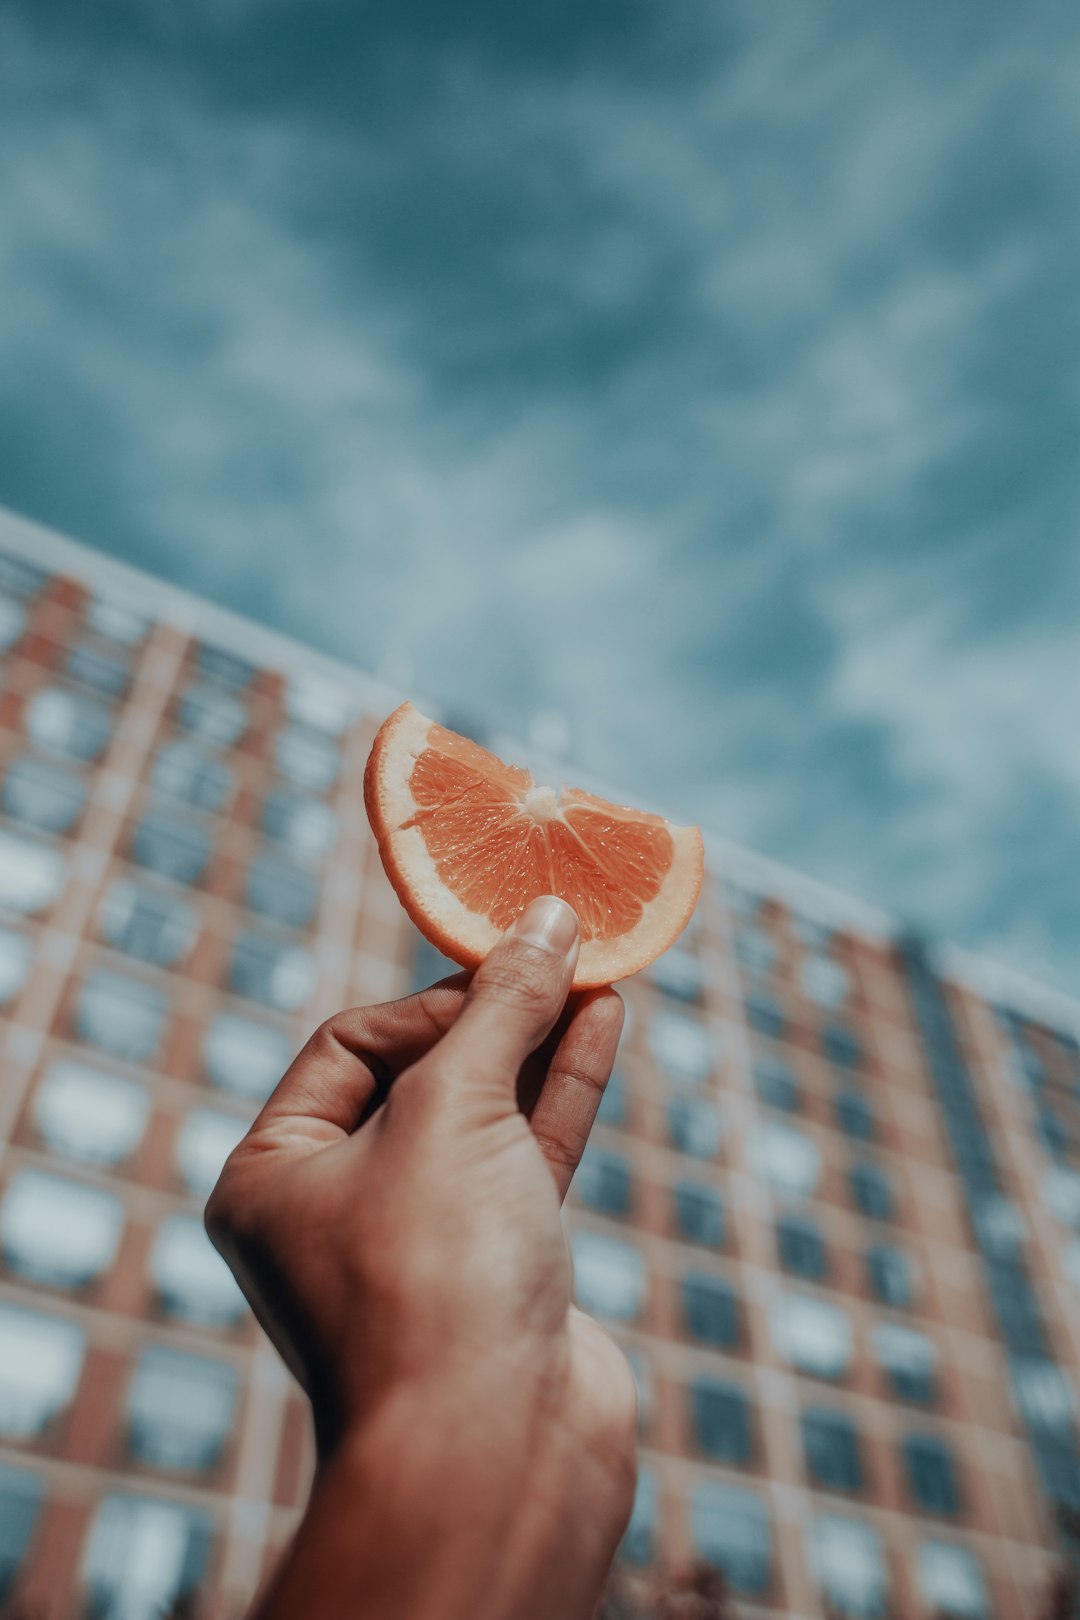 person holding orange fruit under blue sky during daytime